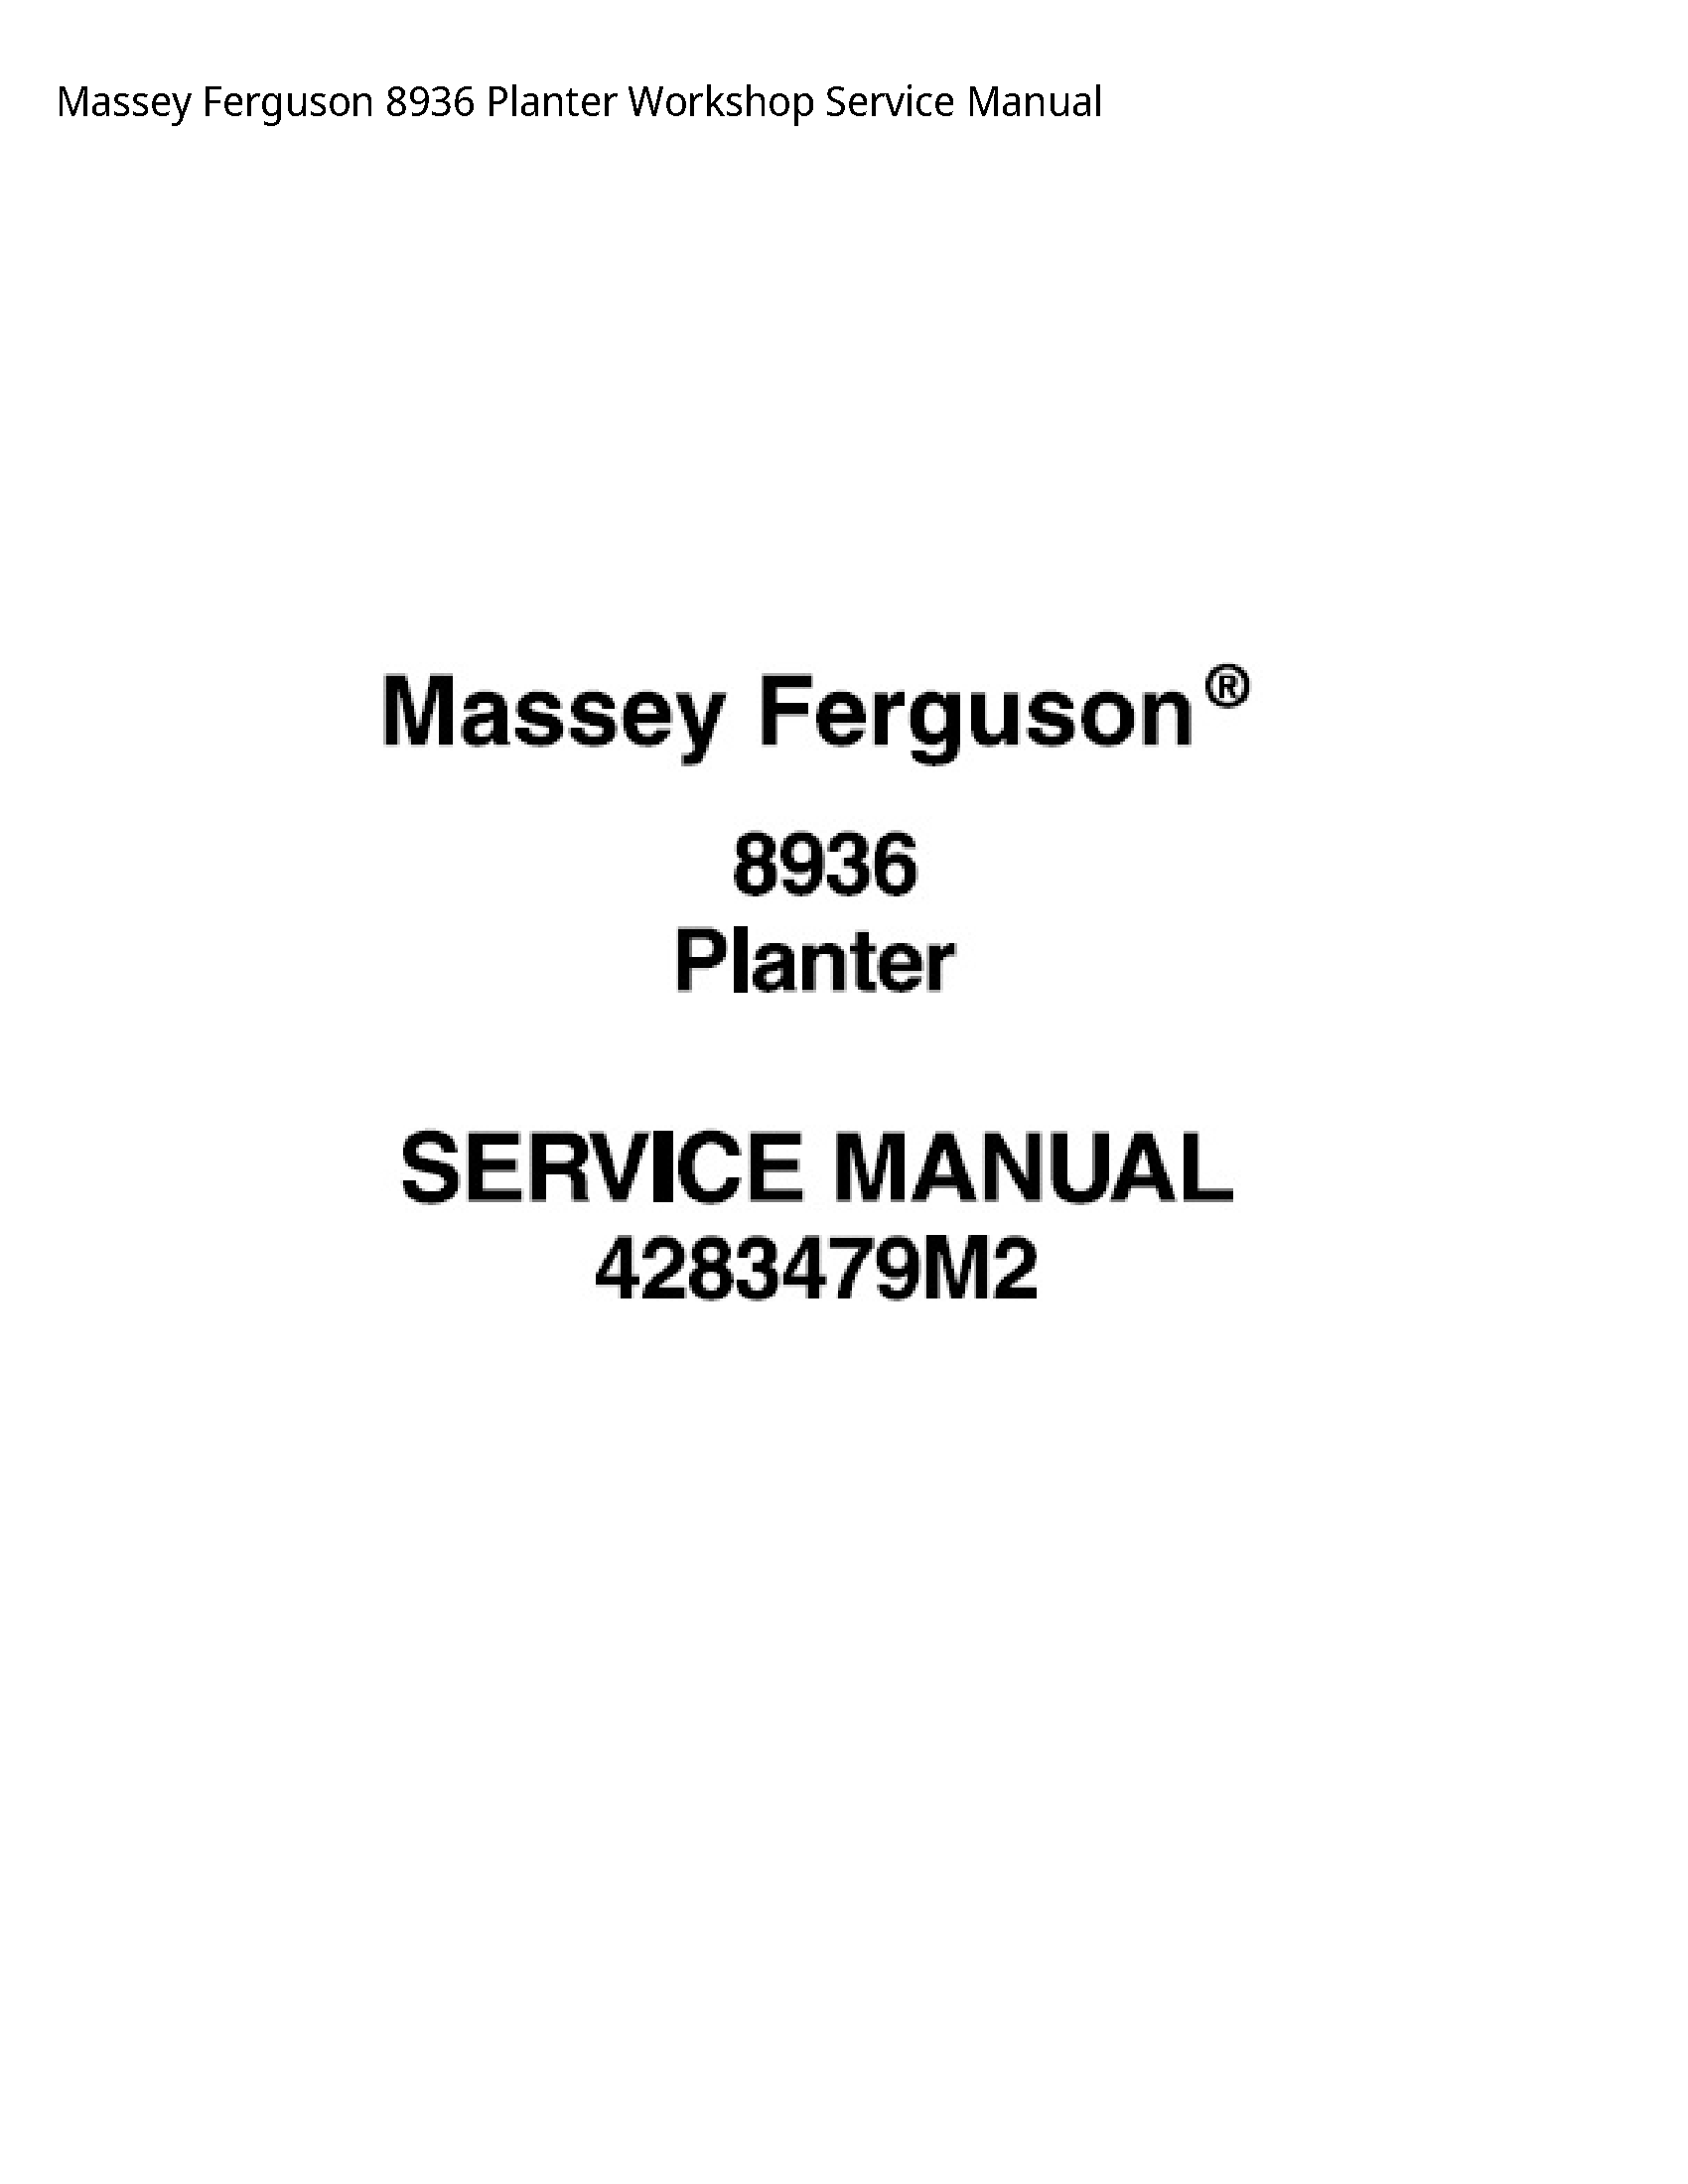 Massey Ferguson 8936 Planter Service manual